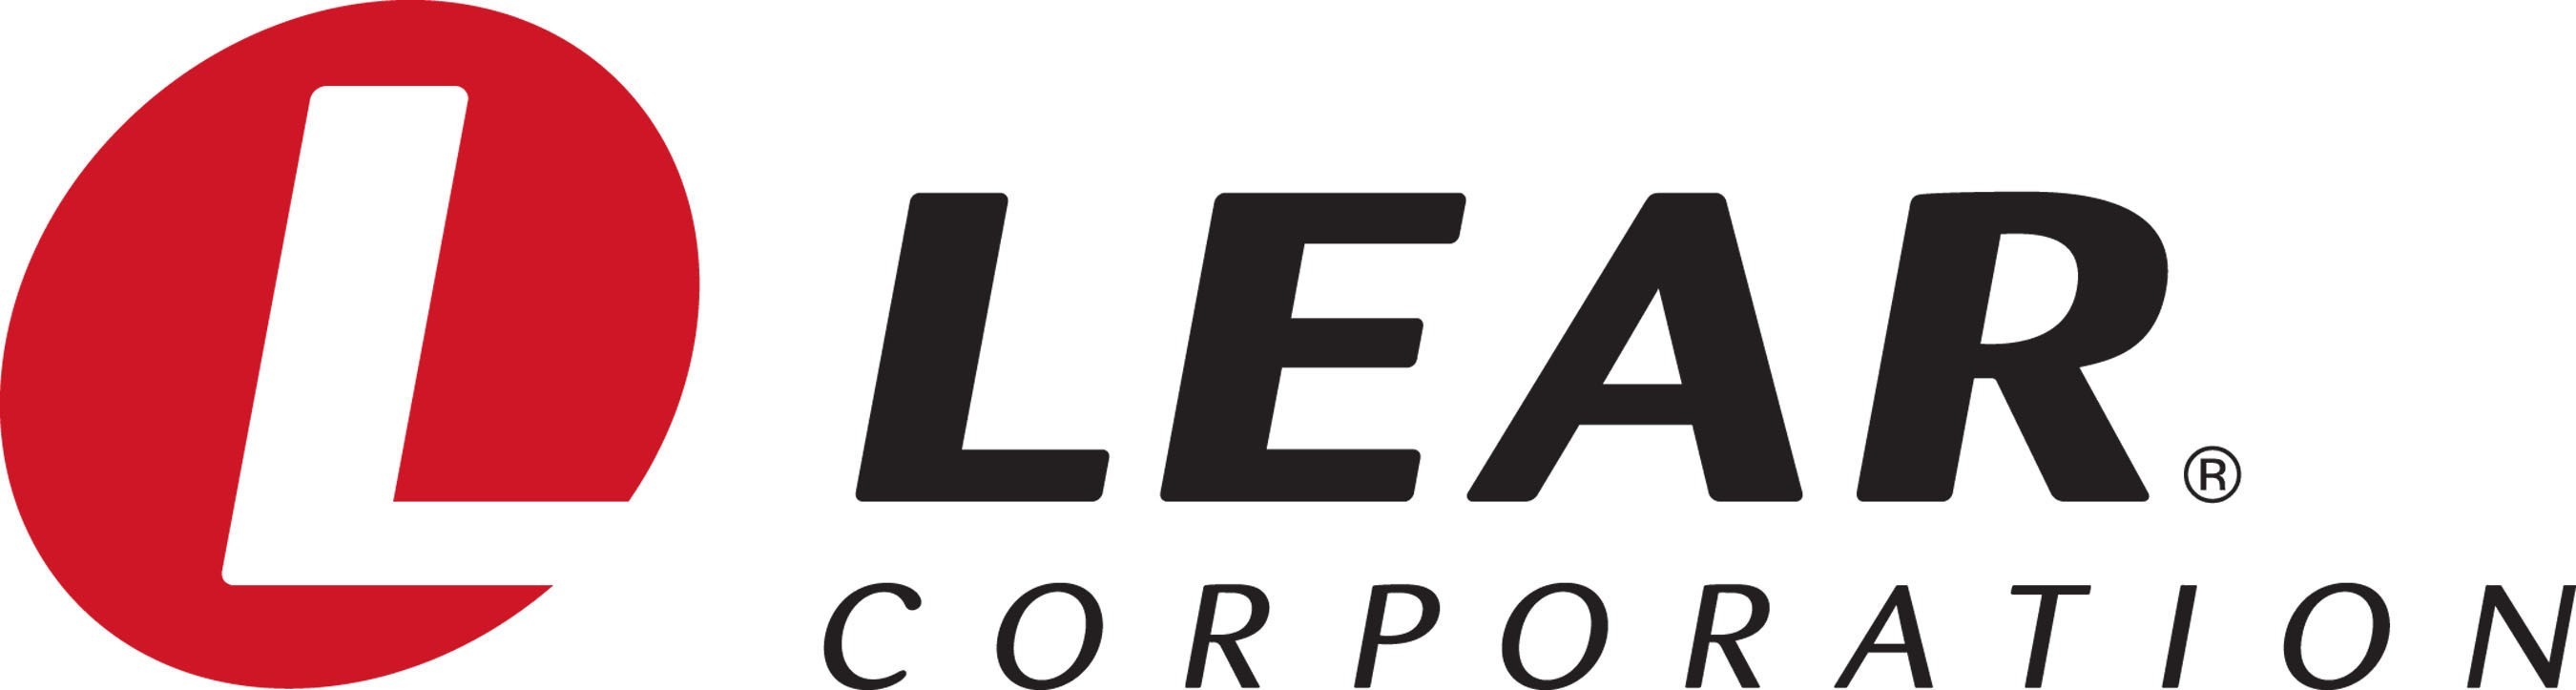 Lear Corporation